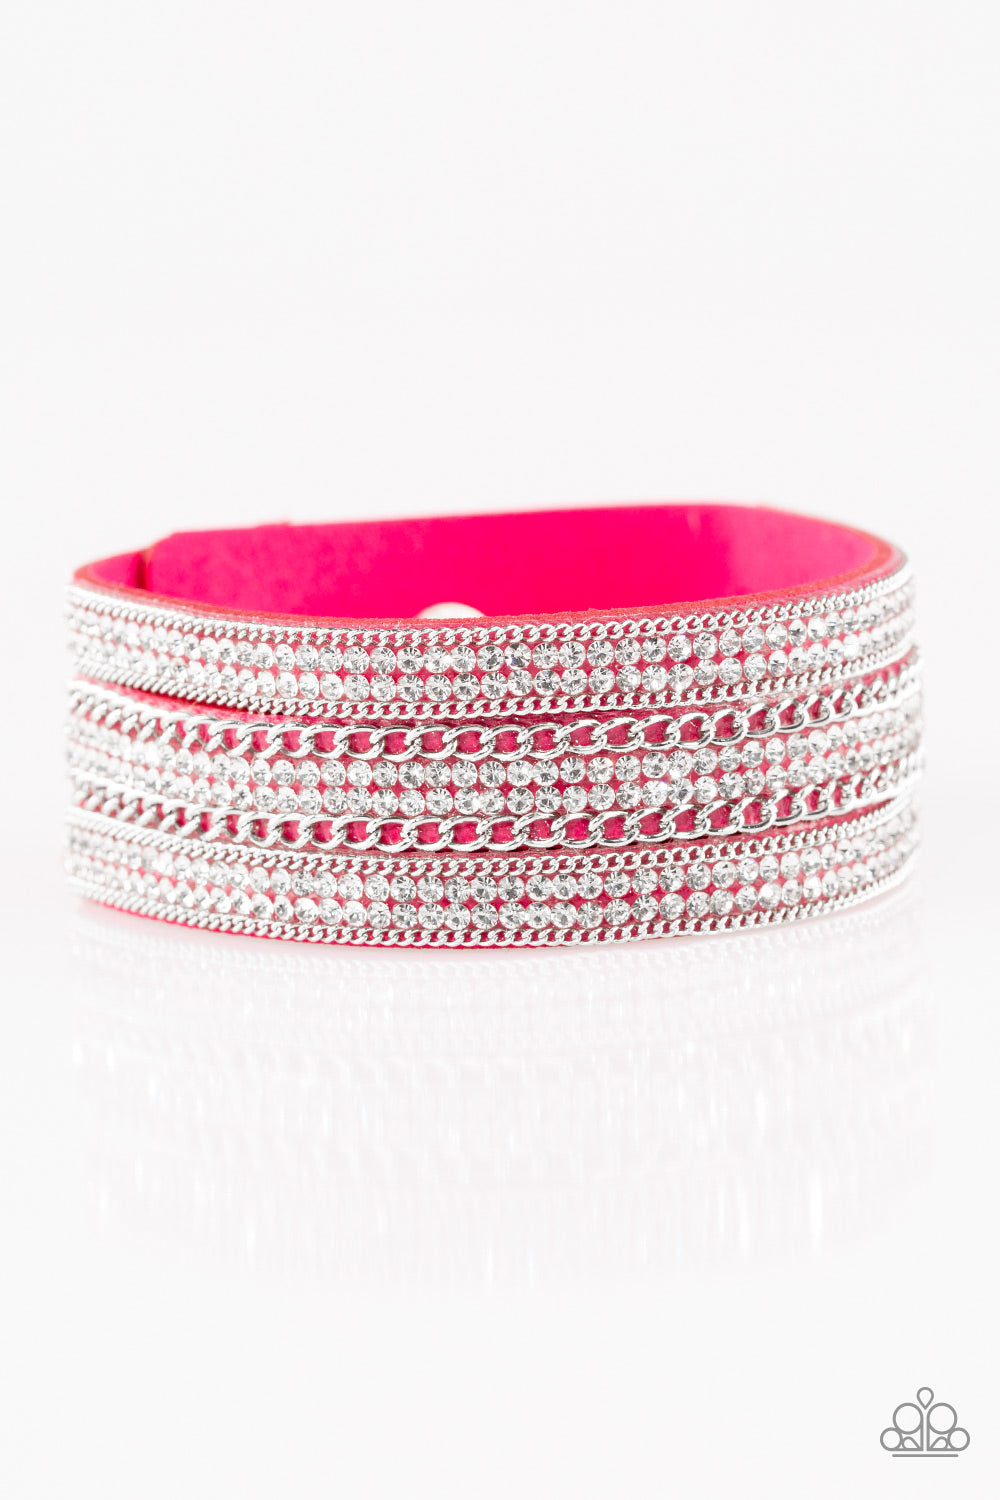 Natural Stone Bracelet Pink Quartz Leather Wrap Bracelets for Women Rose  Gems Crystal Beads Bohemia Jewelry